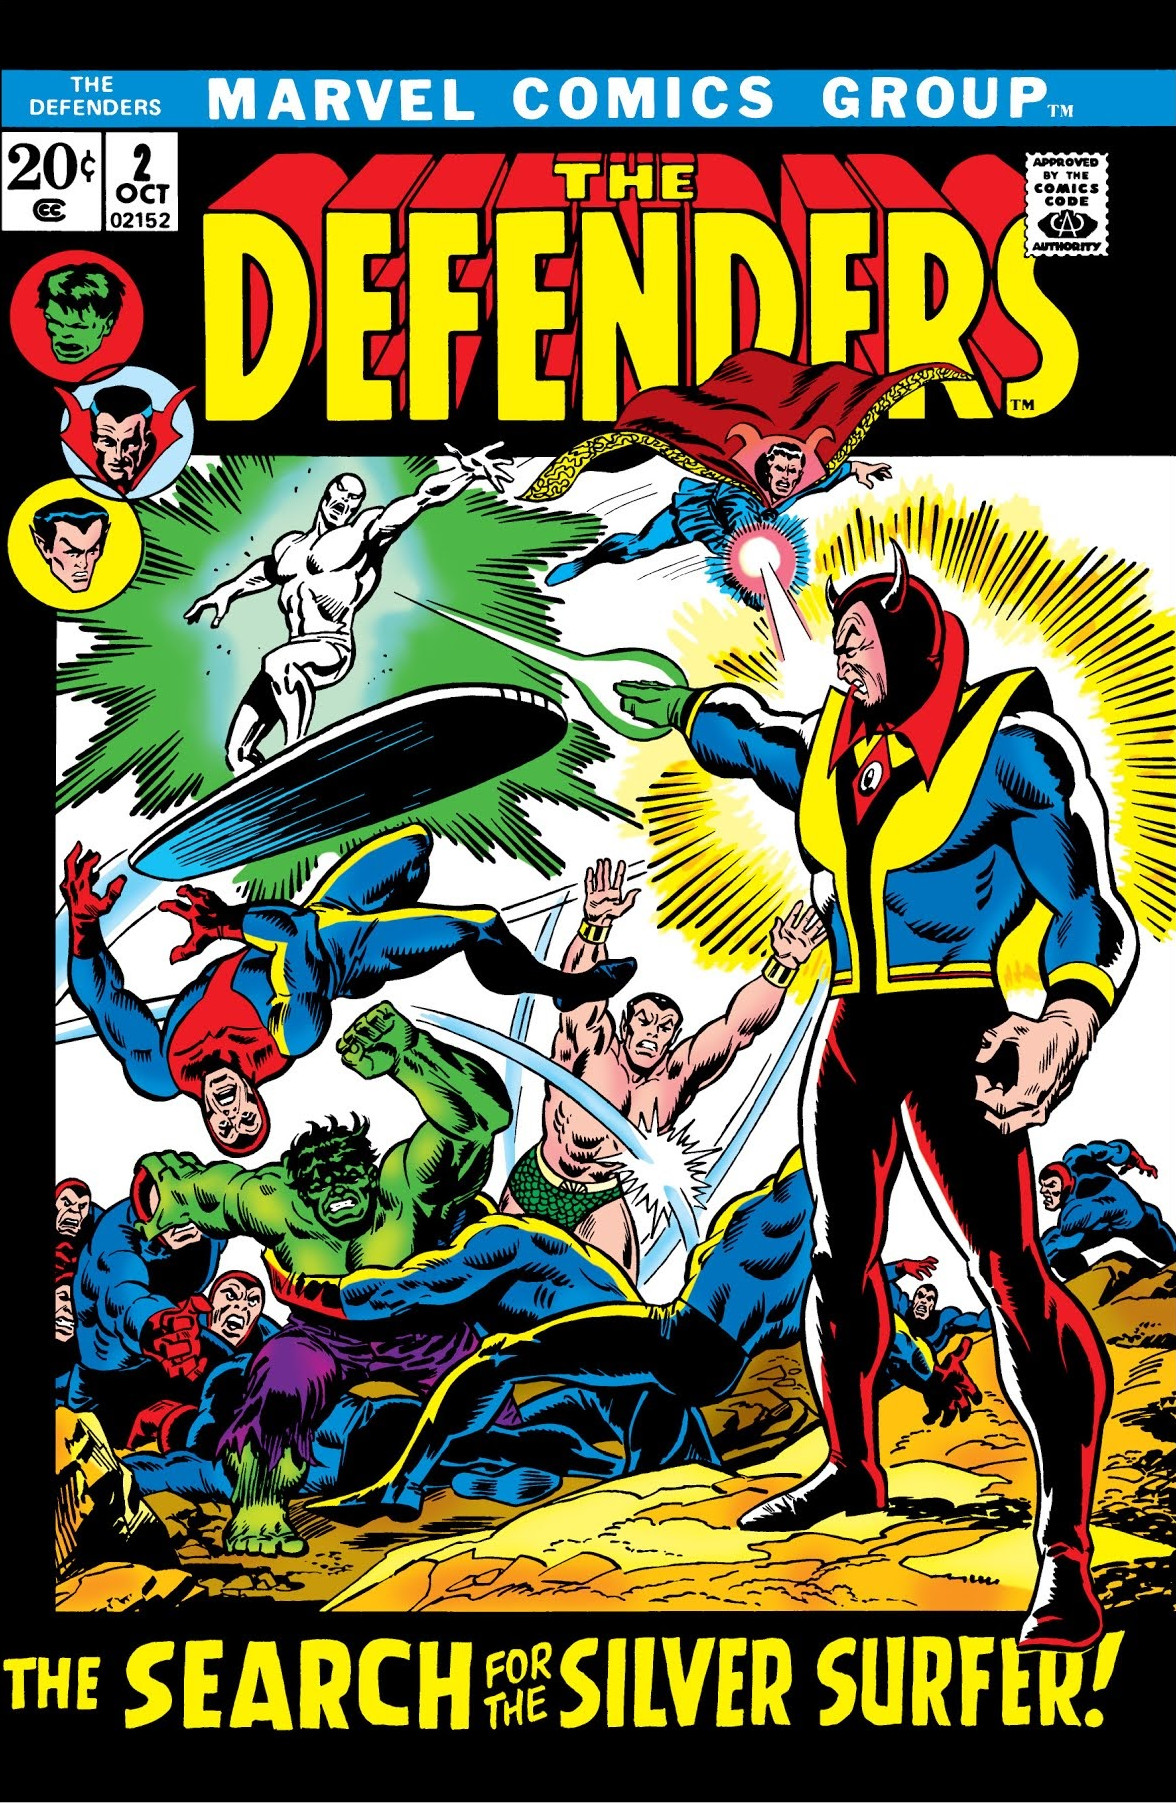 Marvel's THE DEFENDERS Trailer - ComicUI